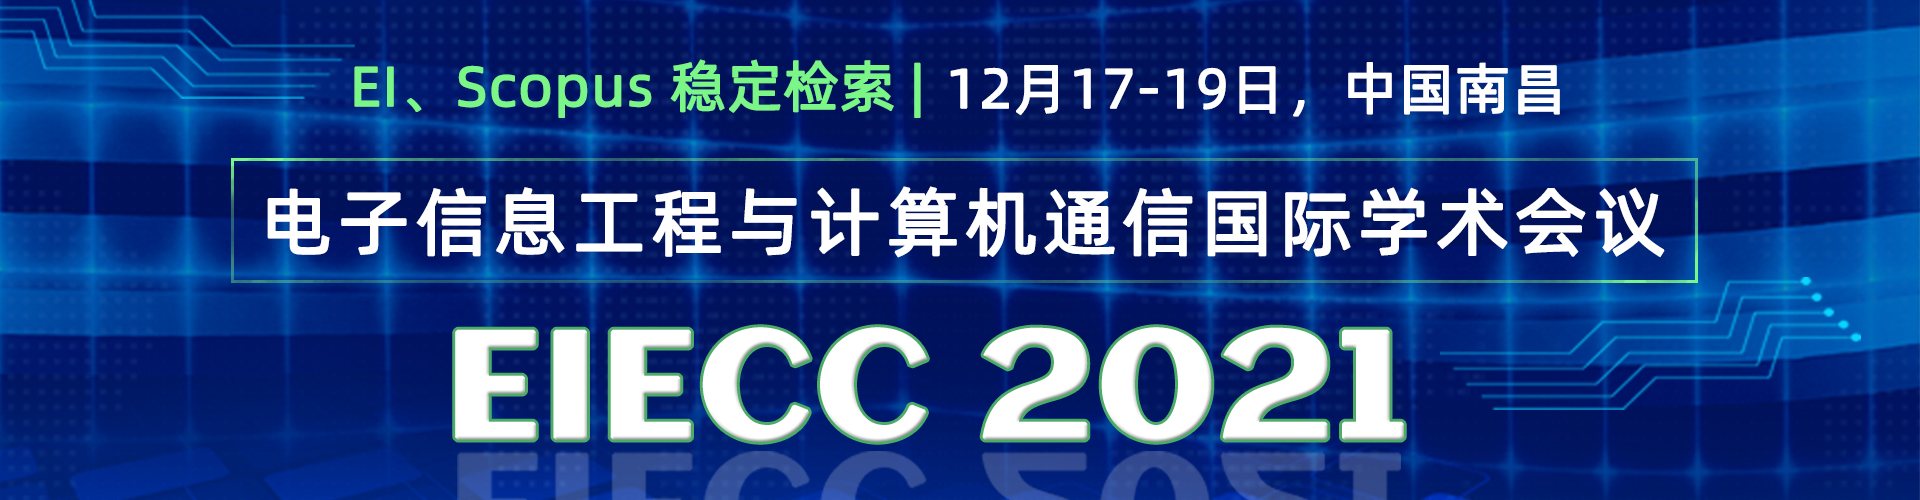 2021 International Conference on Electronic Information Engineering and Computer Communication (EIECC 2021), Nanchang, Jiangxi, China